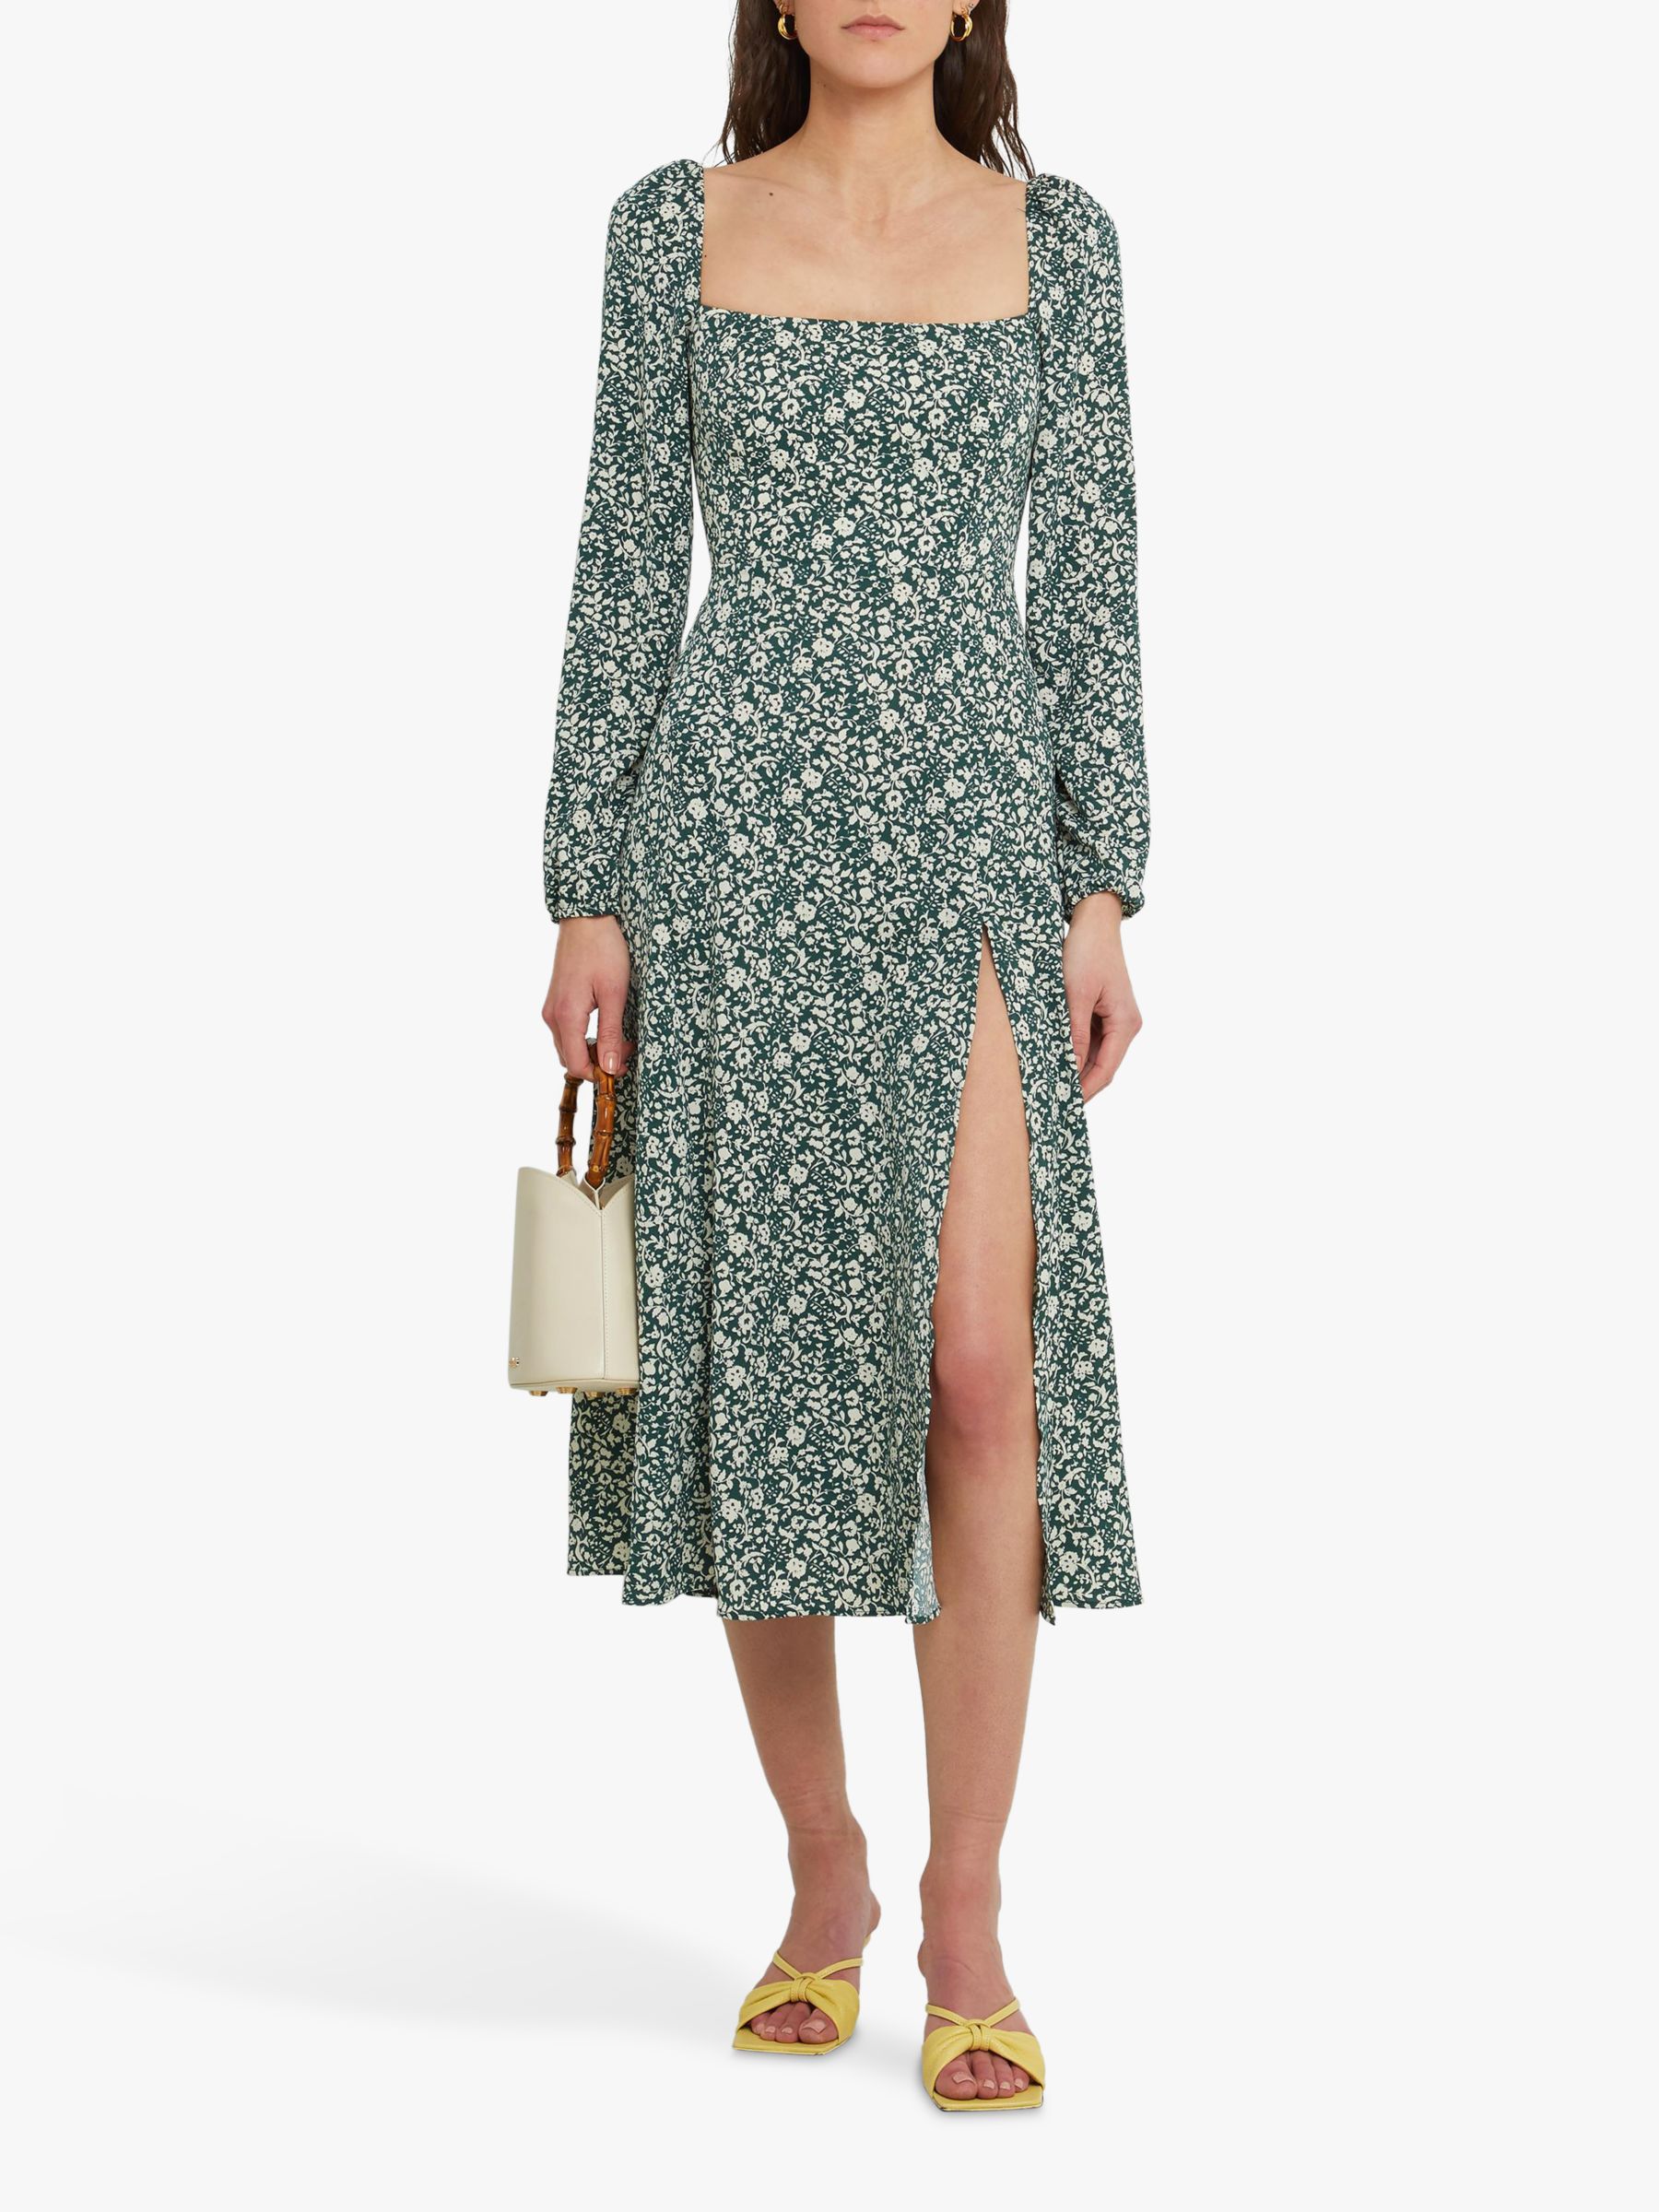 o.p.t Lenon Side Slit Midi Floral Dress, Forest/White, XS